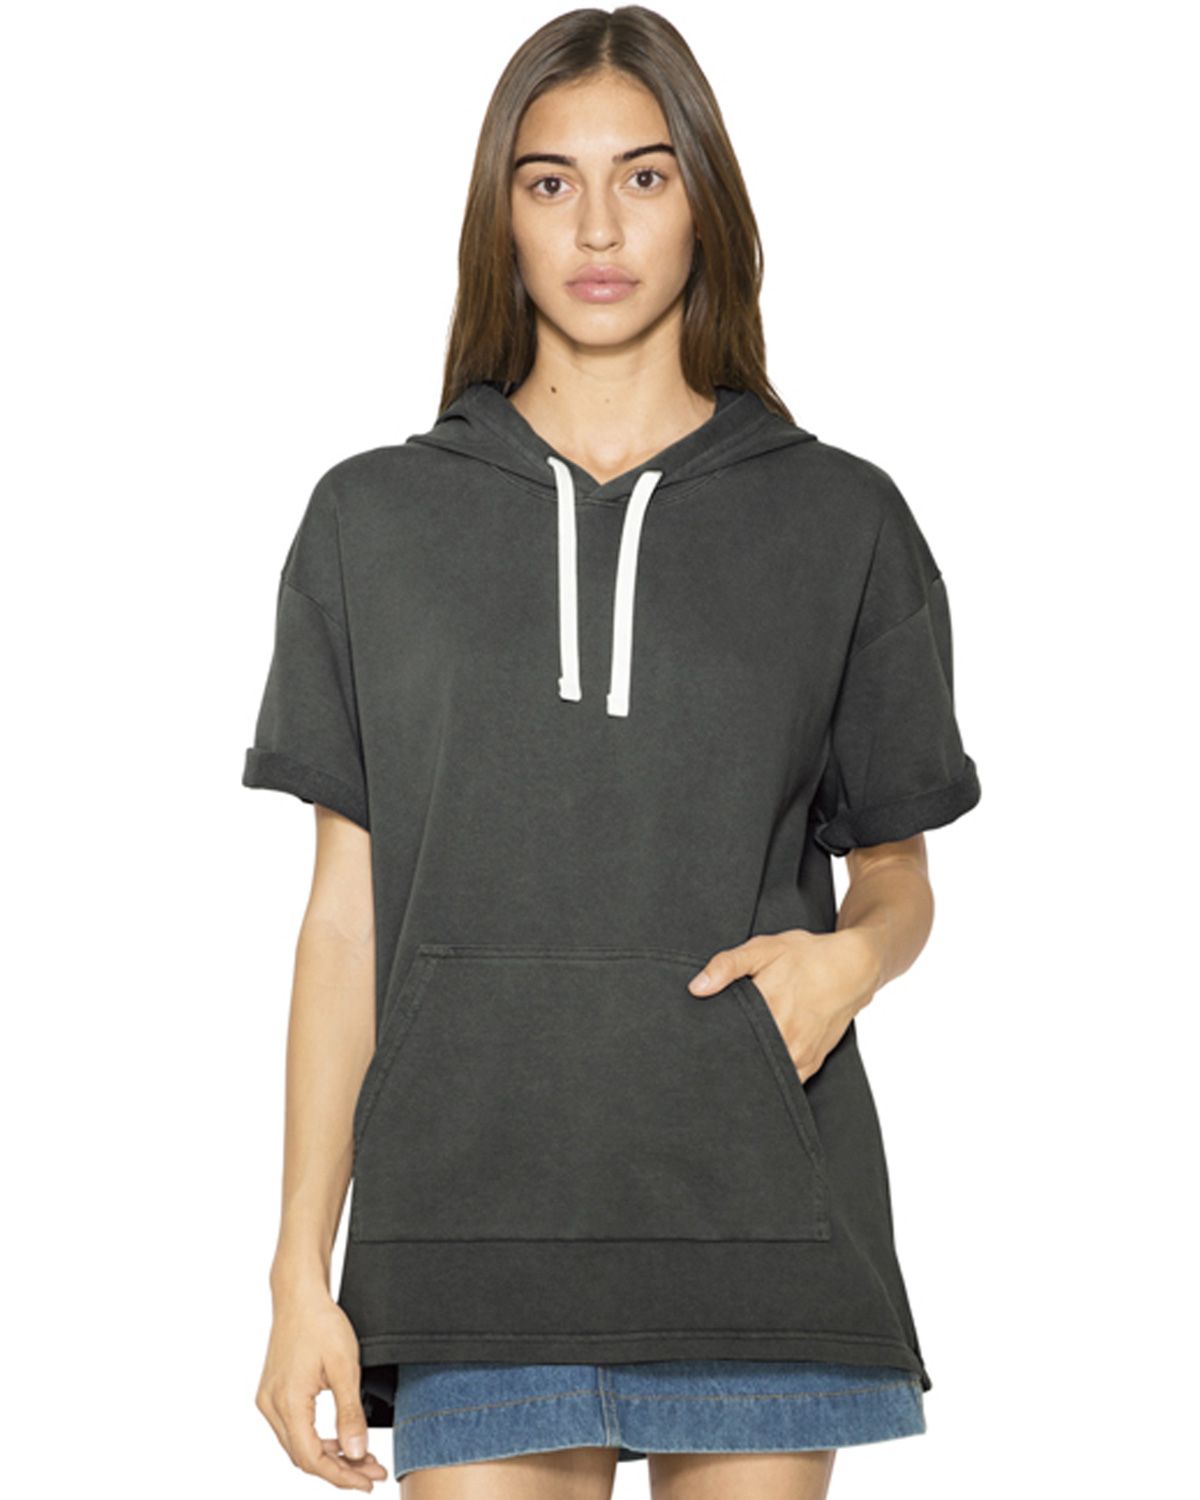 American Apparel TF424W Unisex Garment-Dyed Kangaroo Pocket Sweatshirt